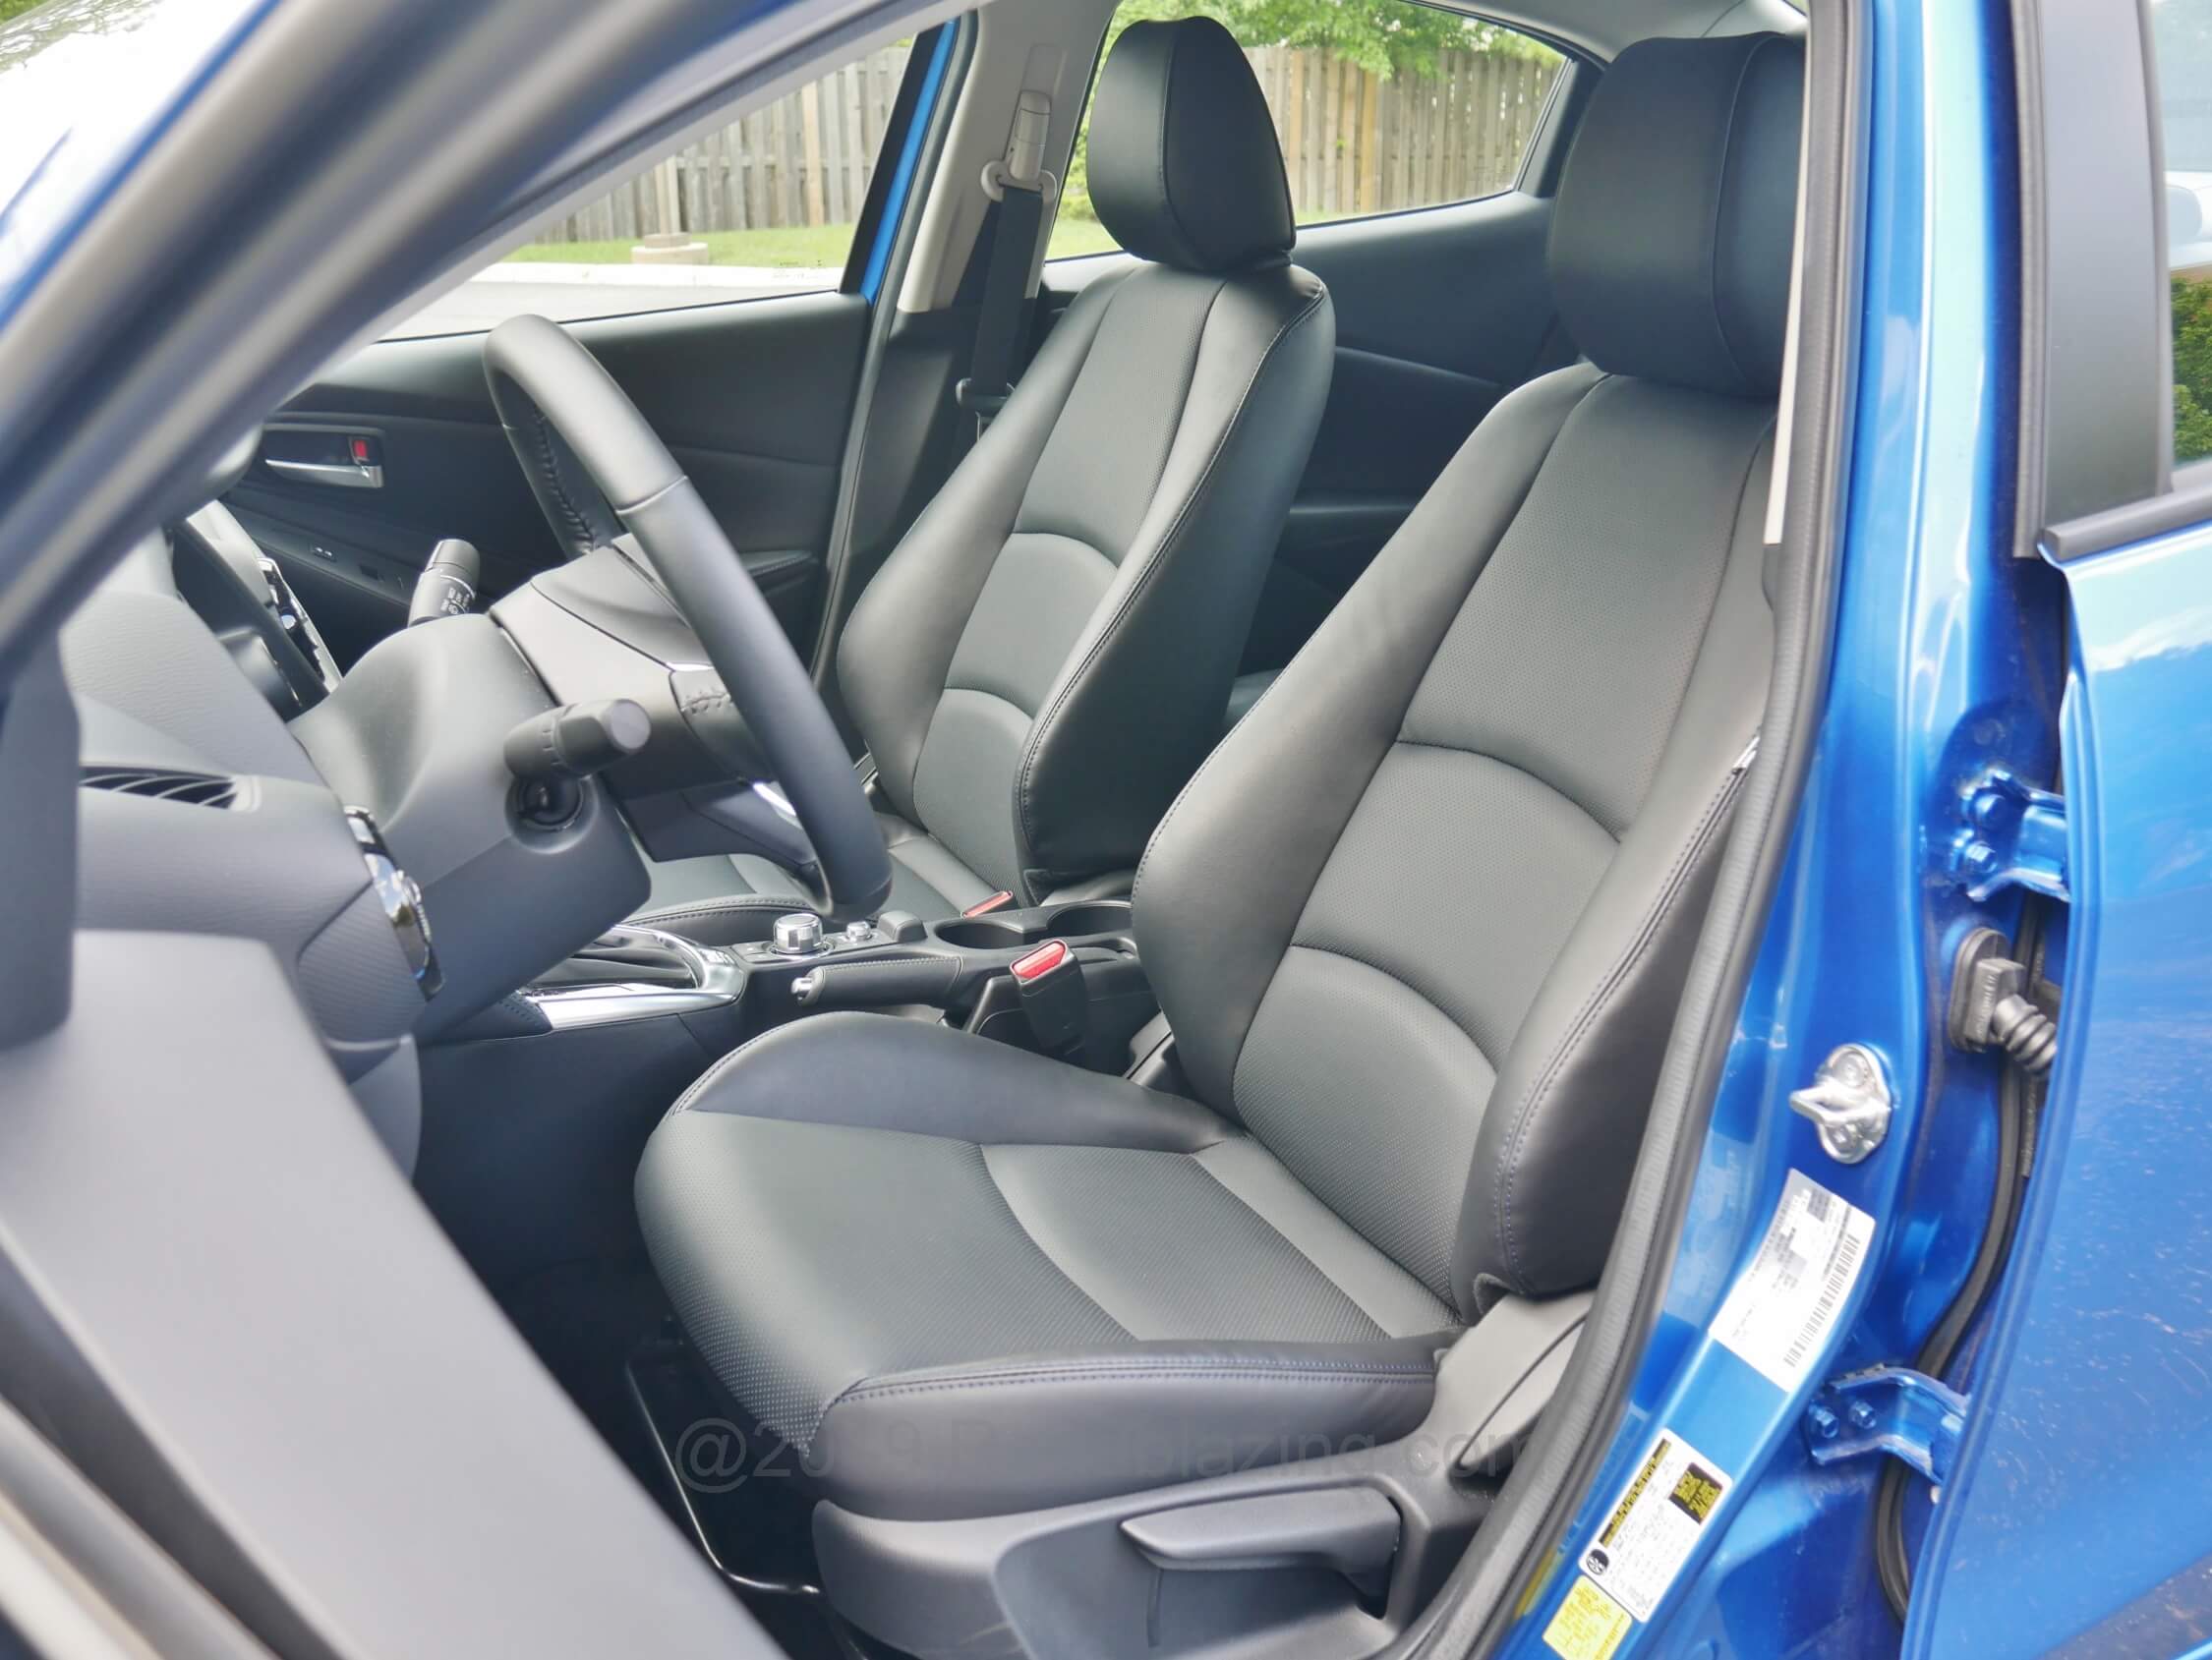 2019 Toyota Yaris sedan XLE: Softex leatherette 6-way manually adjusting driver's seat, w/ tilt, telescoping leather steering wheel